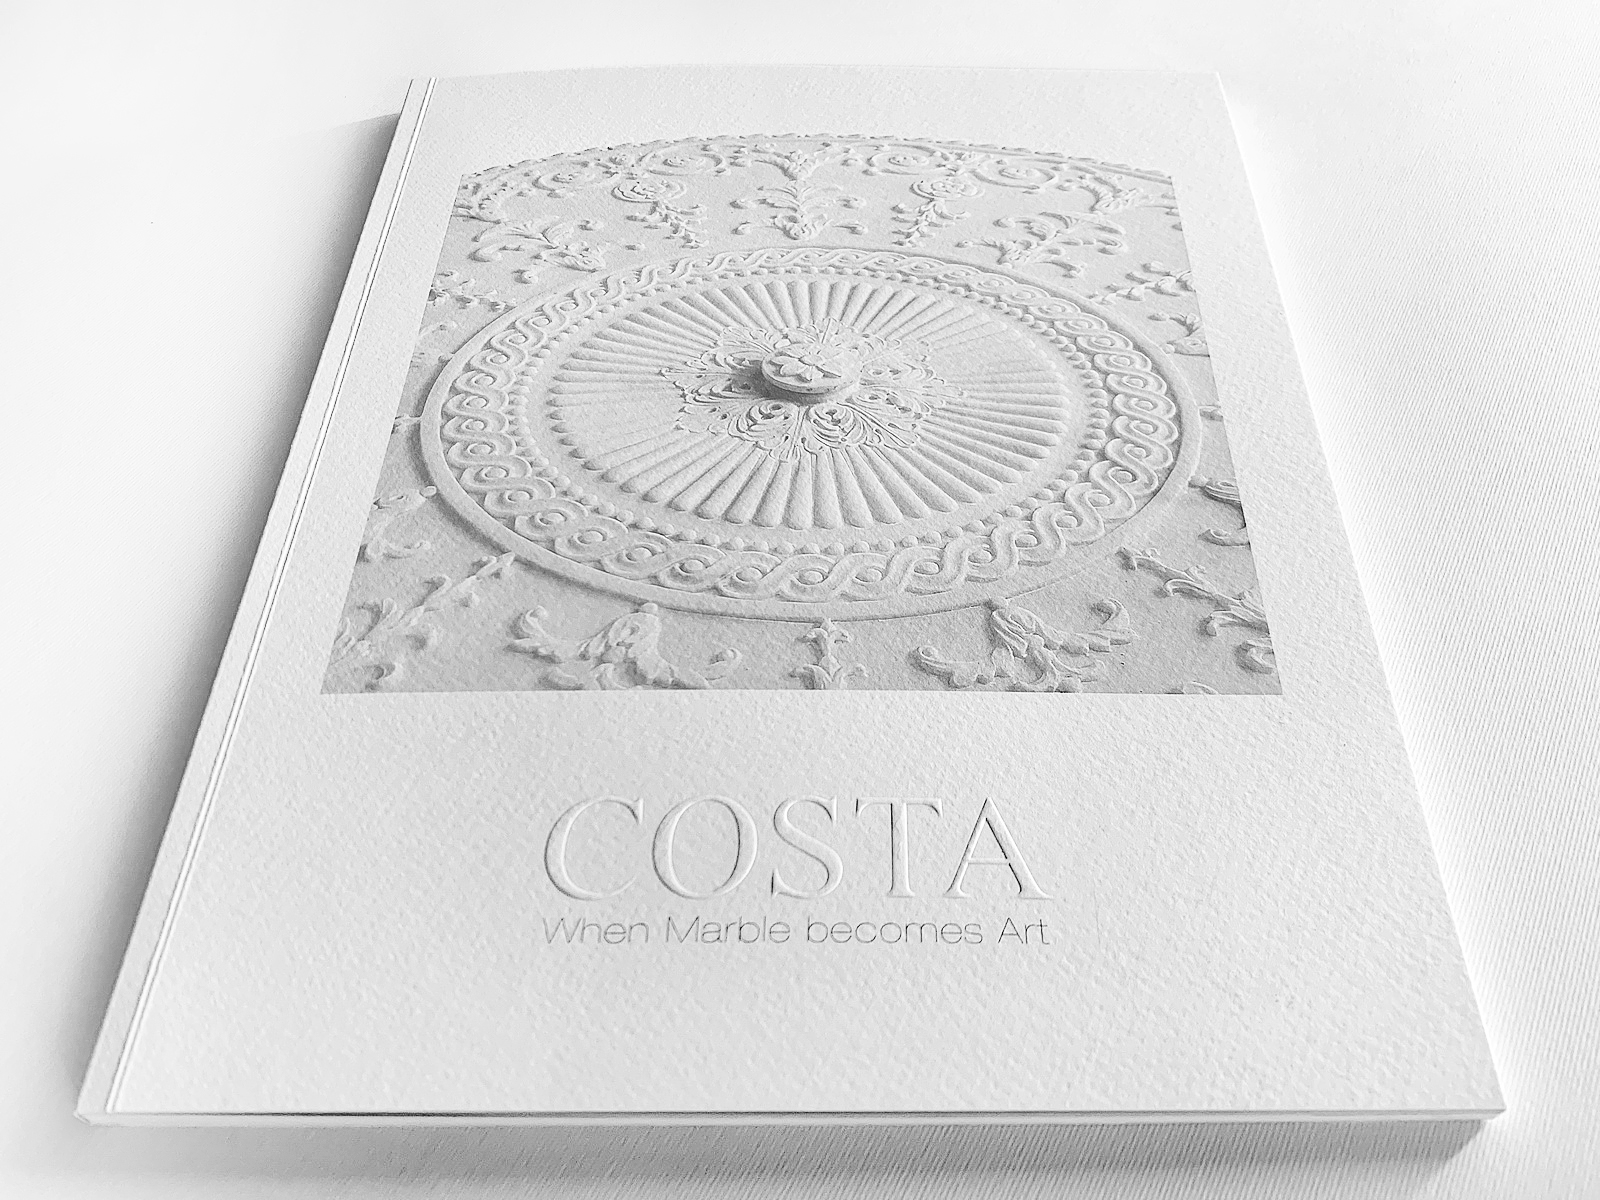 Paolo-Costa-Scultura-Marmi-Carrara-Brochure-2019-002